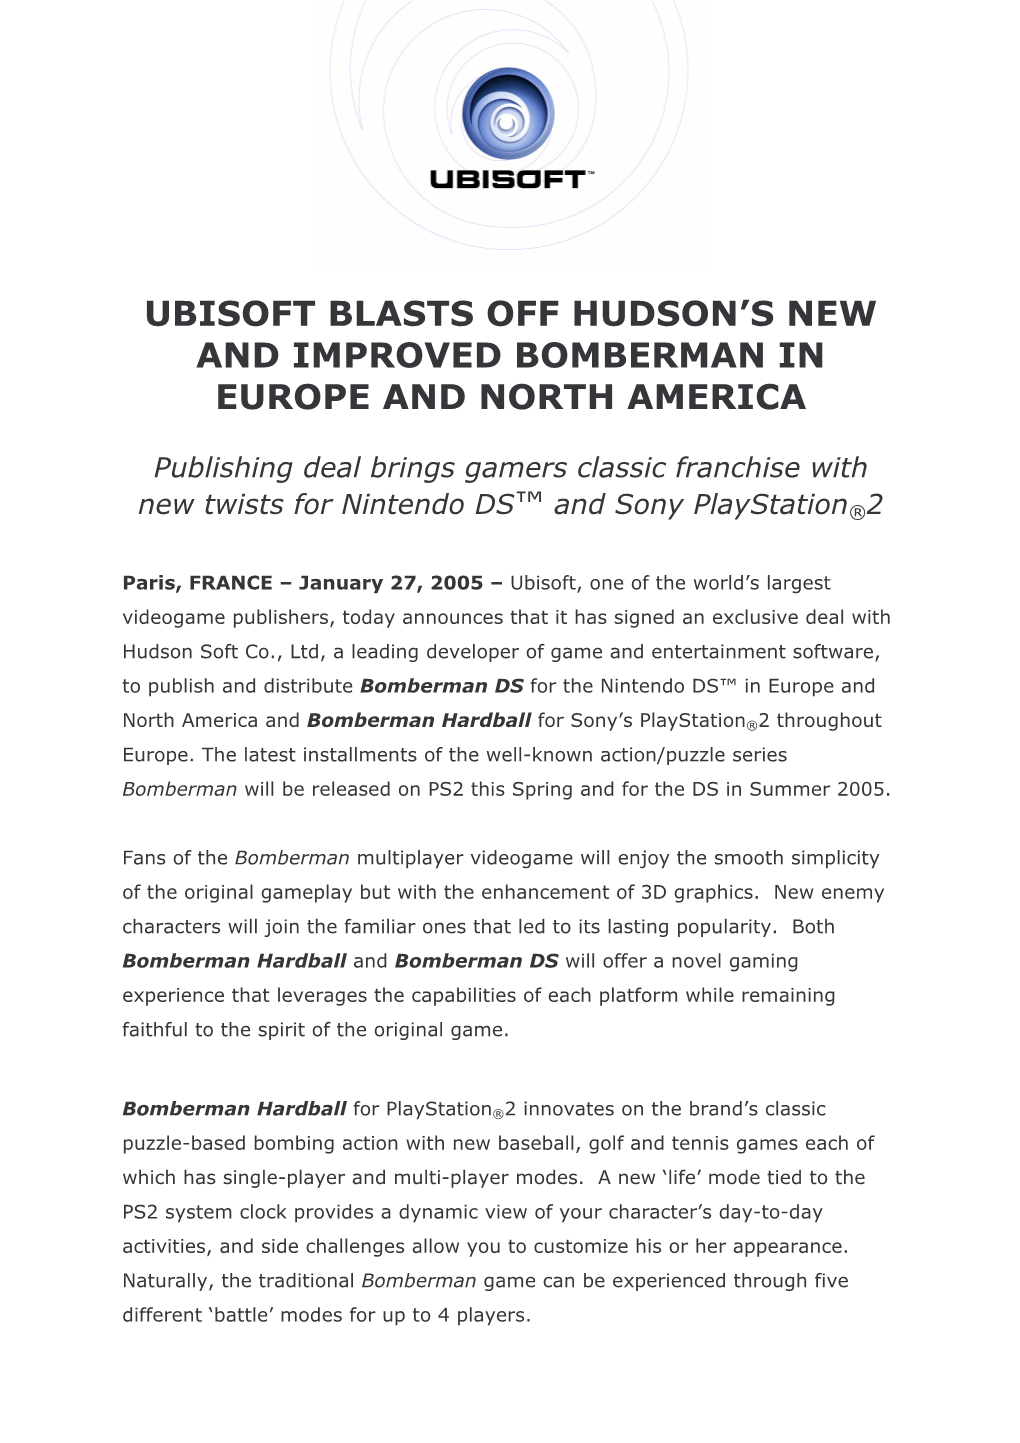 Ubisoft Blasts Off Hudson's New and Improved